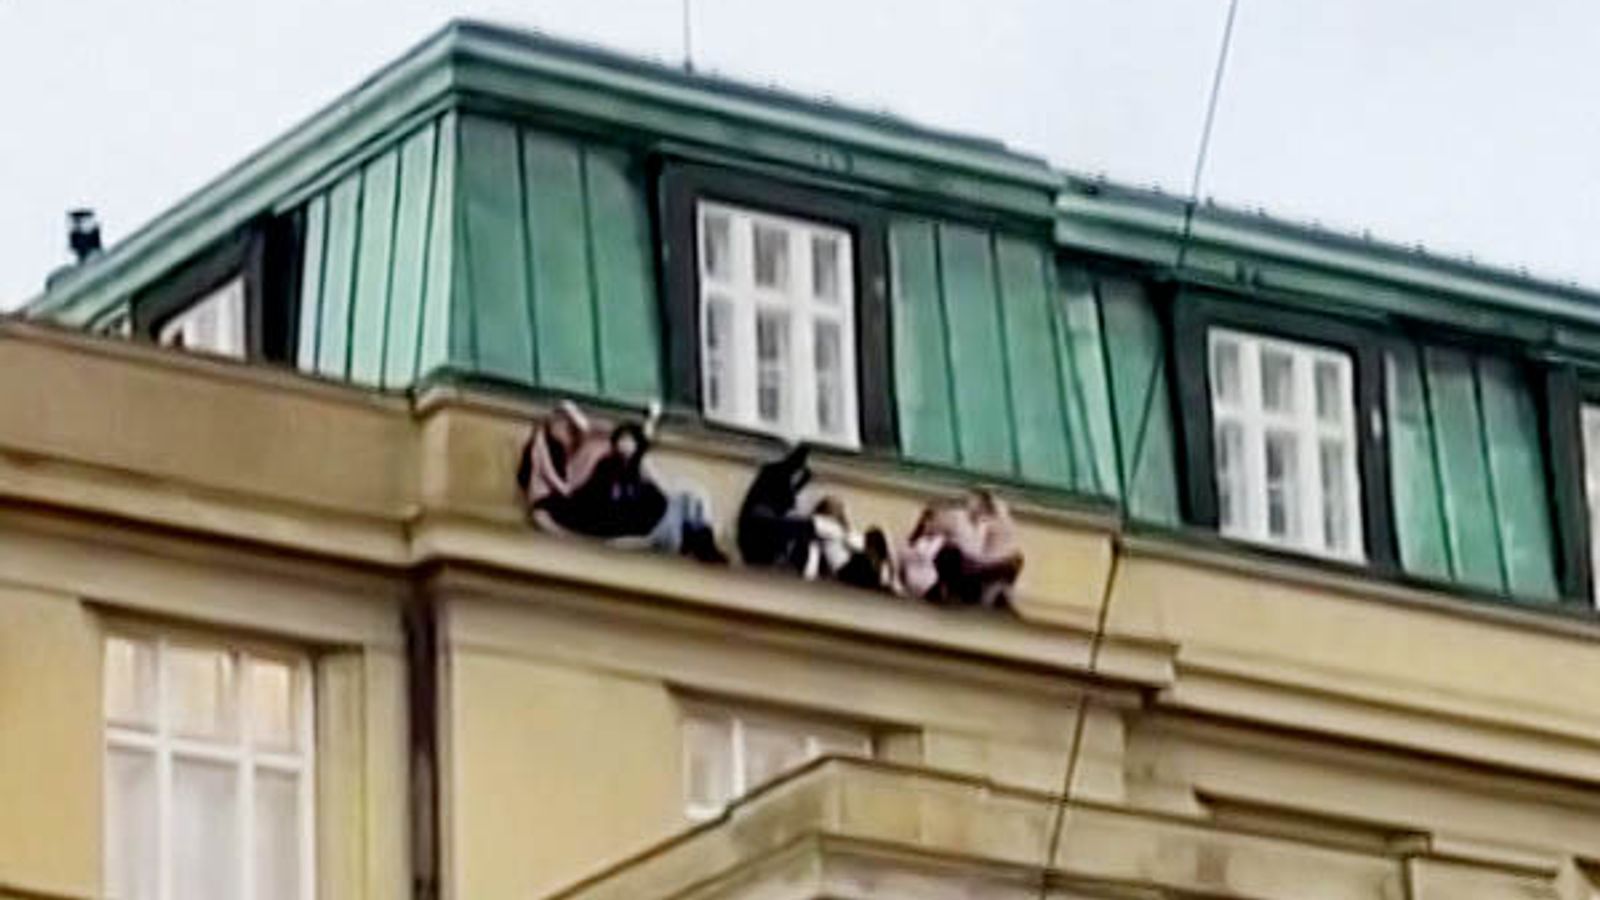 Prague shooting: Footage shows people cowering on ledge of university building as police hunt gunman